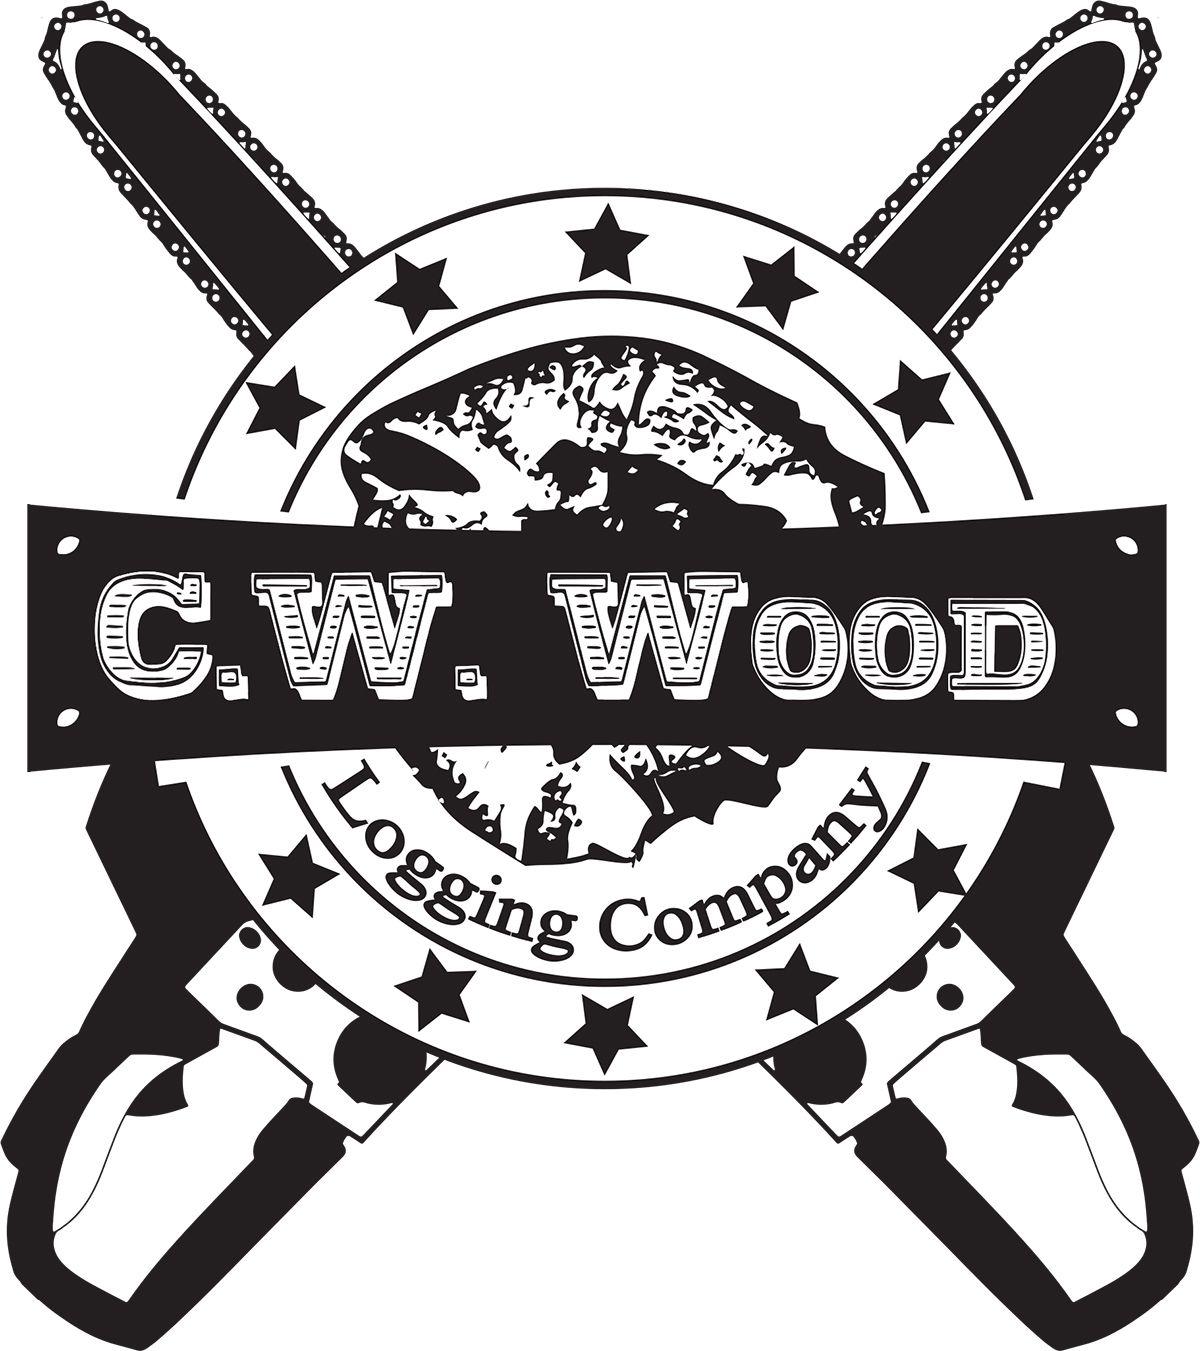 Logging Logo - Masculine, Bold, Industry Logo Design for C. W. Wood Logging Company ...